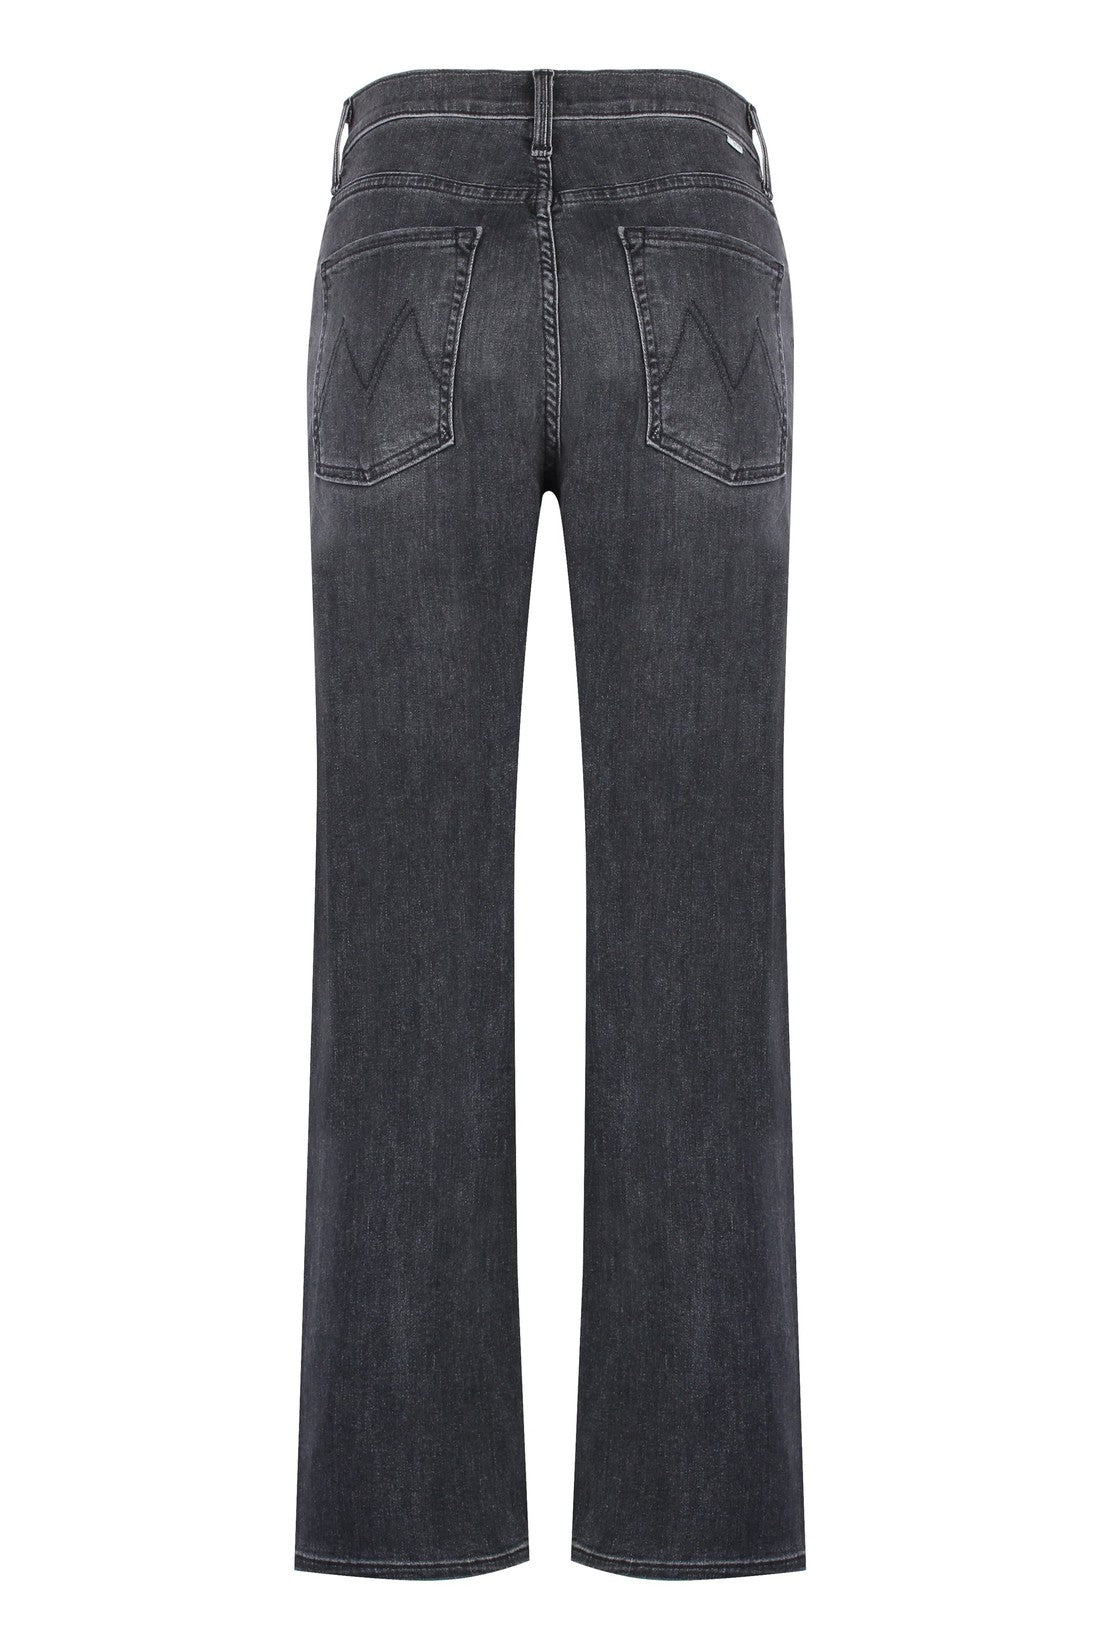 Mother-OUTLET-SALE-The Ditcher Zip Ankle jeans-ARCHIVIST